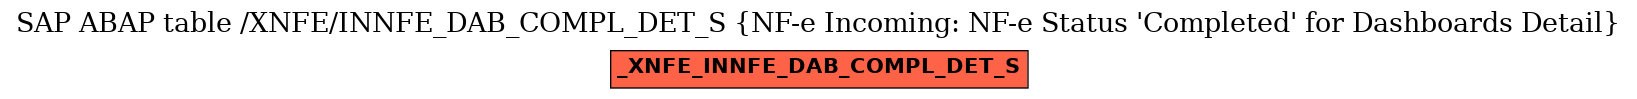 E-R Diagram for table /XNFE/INNFE_DAB_COMPL_DET_S (NF-e Incoming: NF-e Status 